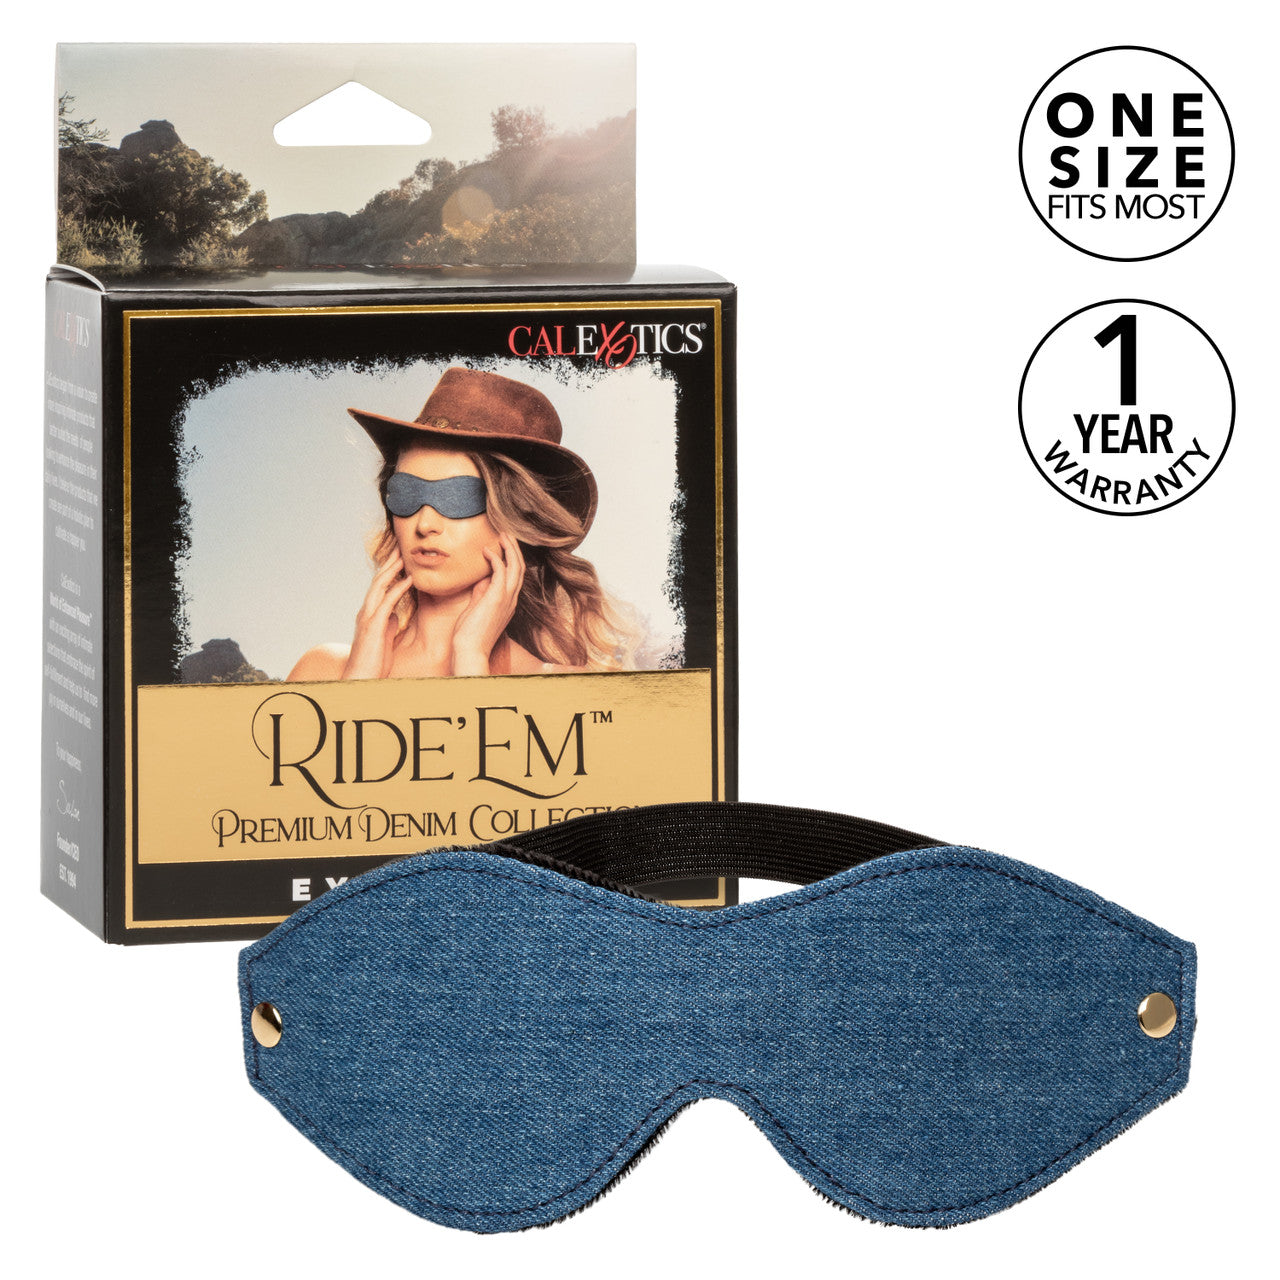 Ride 'Em Premium Denim Collection Eye Mask - Thorn & Feather